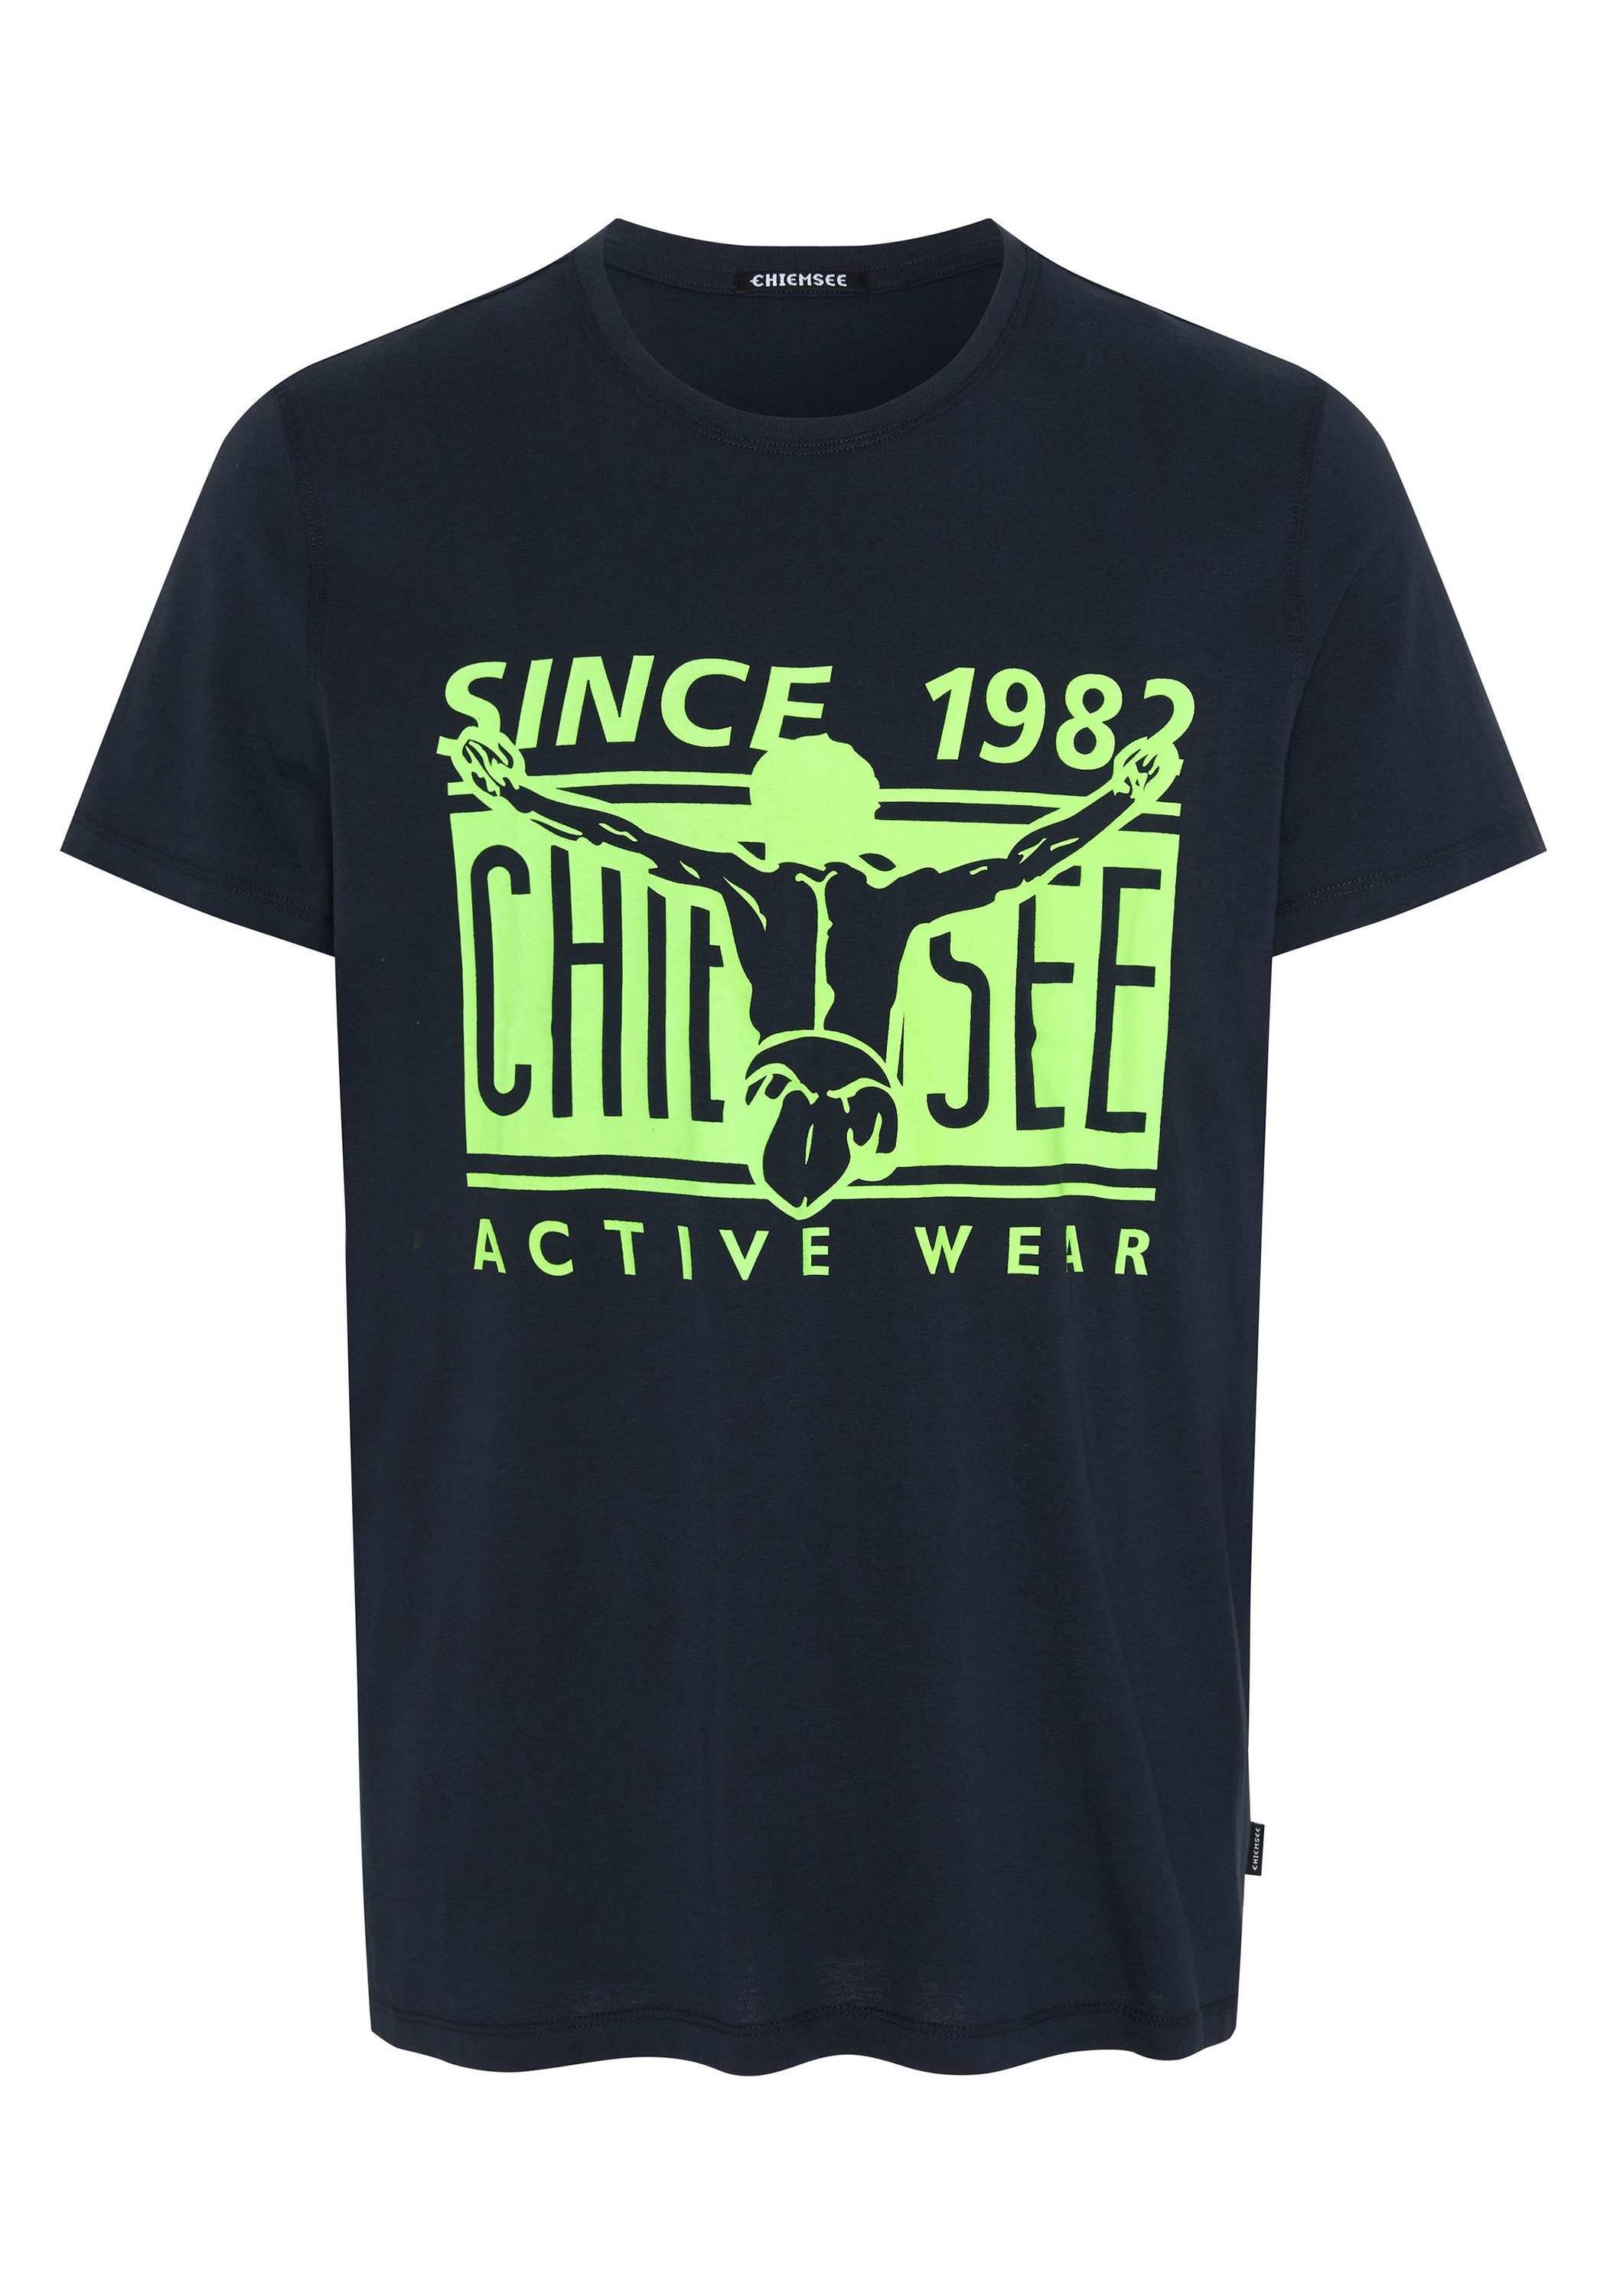 Chiemsee Print-Shirt T-Shirt aus Baumwolle in Two-Tone-Optik 1 Night Sky